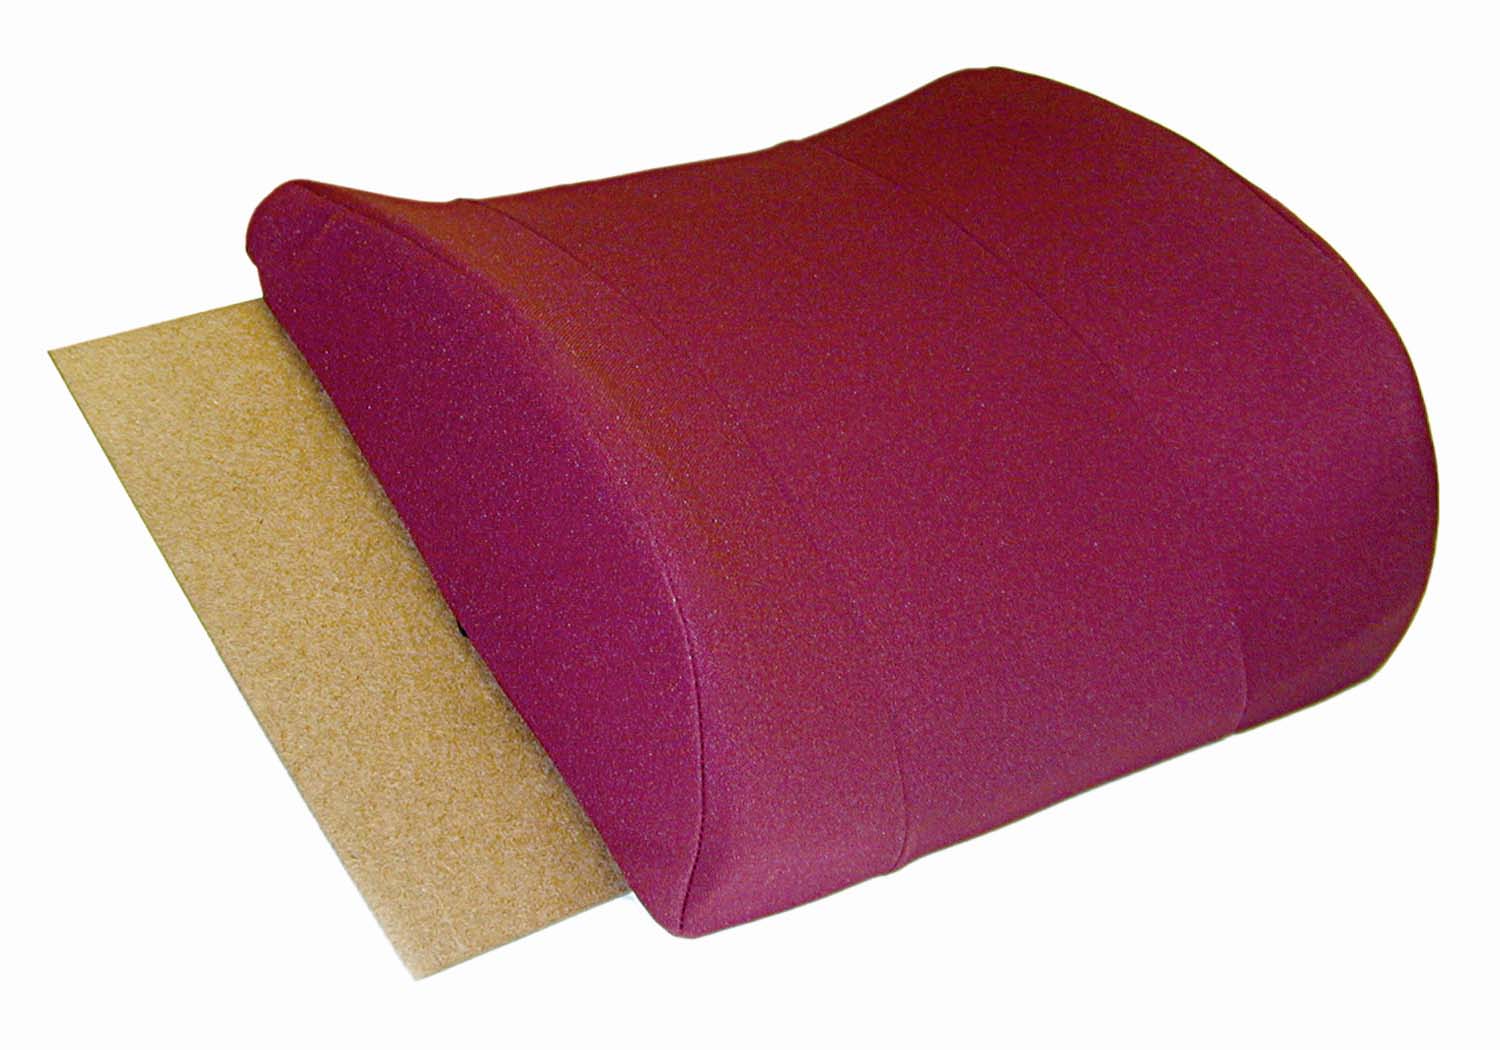 relax-a-bac-lumbar-cushion-w-insert-burgundy-555-7302-0700-lr-2.jpg